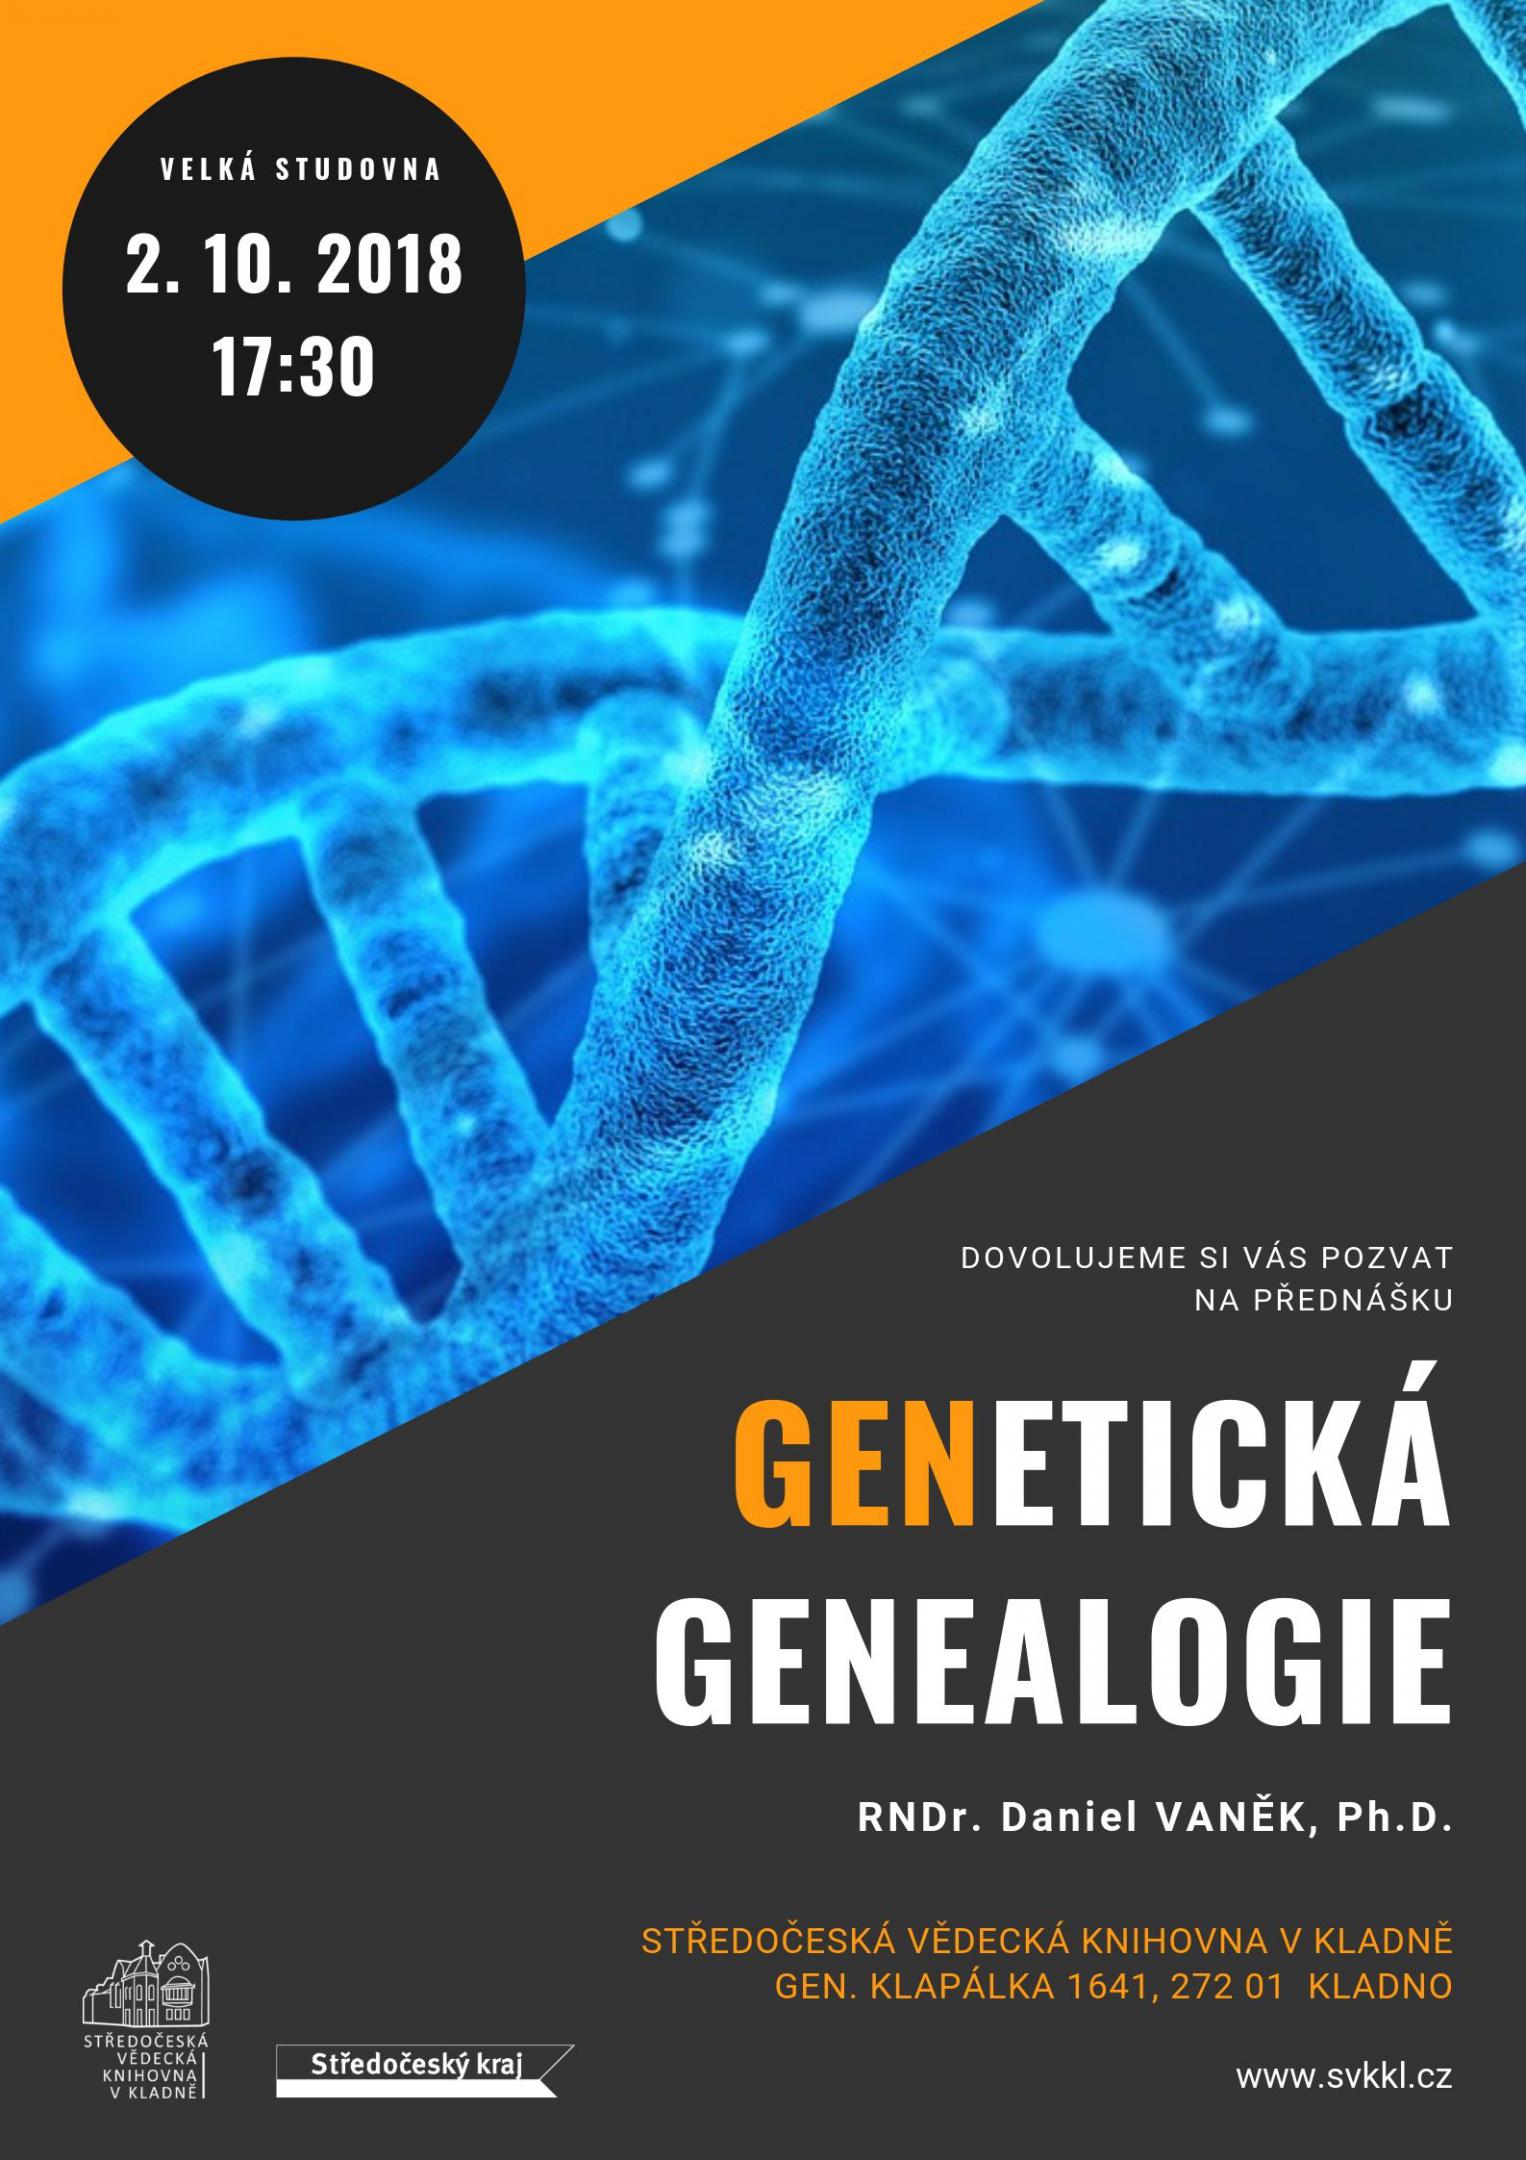 Fotogalerie Genetická genealogie